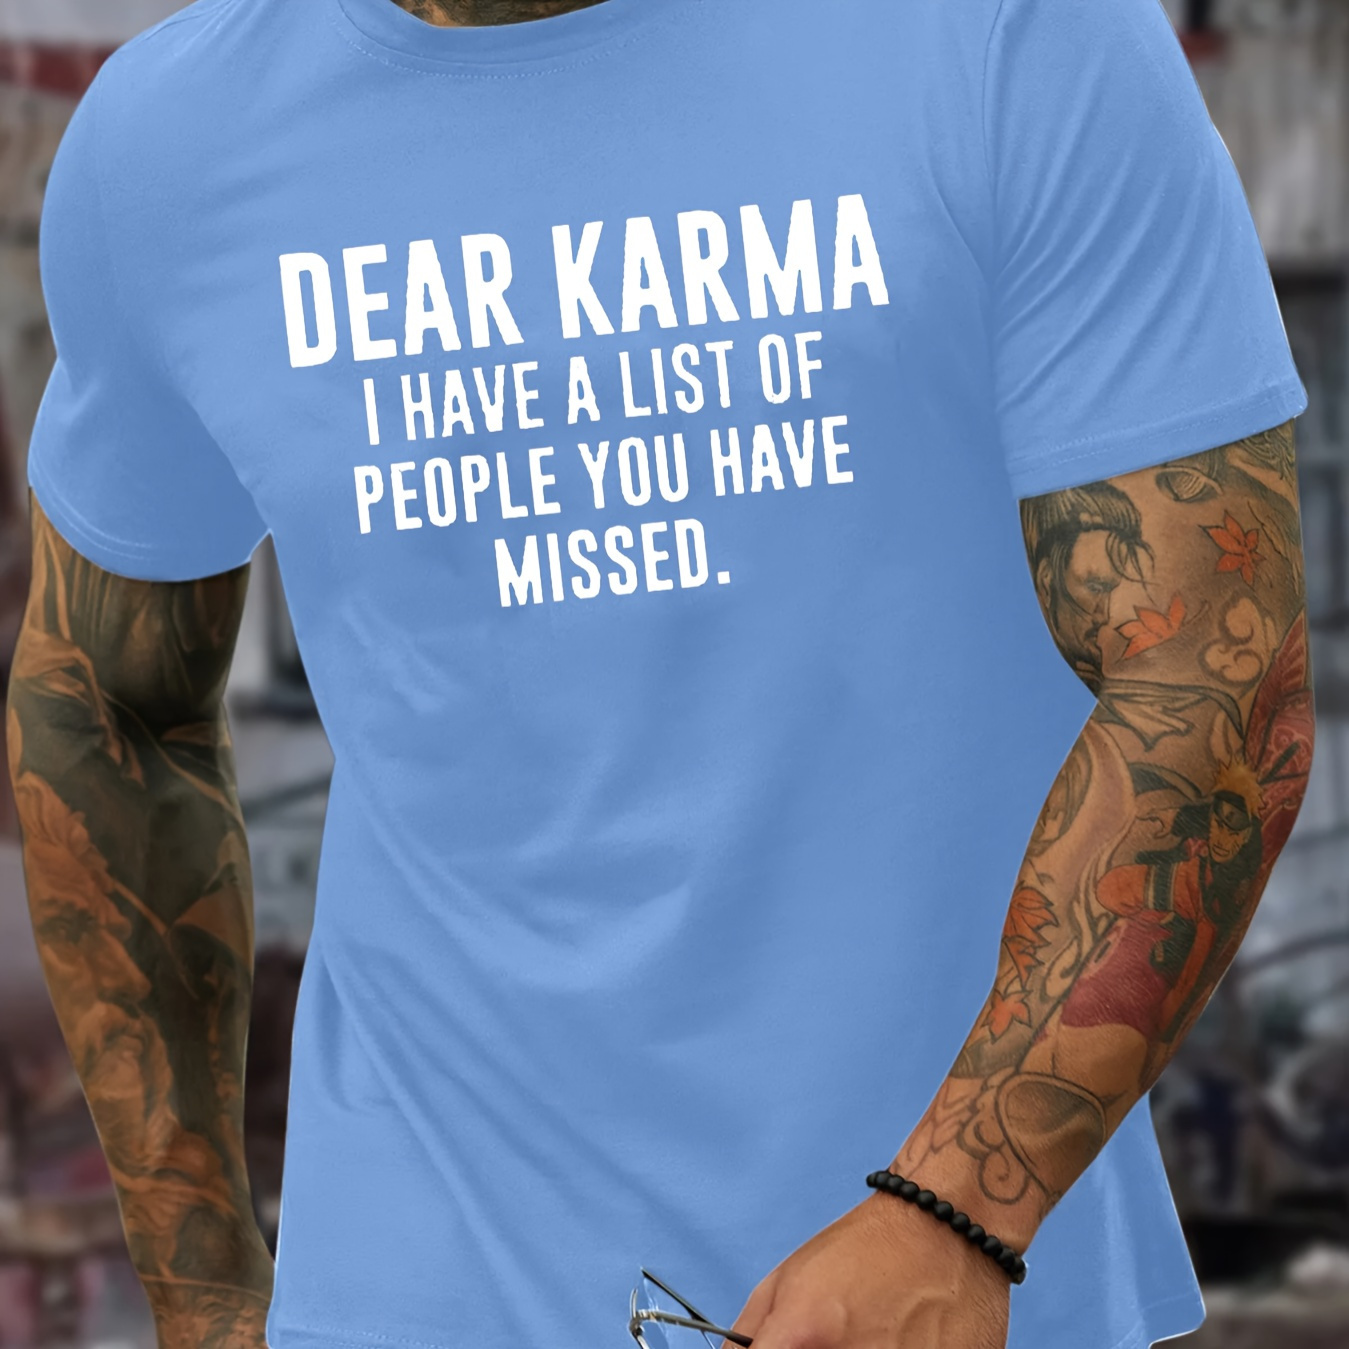 

Dear Karma Print Men's Casual T-shirt, Short Sleeve Versatile Comfy Tee Tops For Summer Outdoor